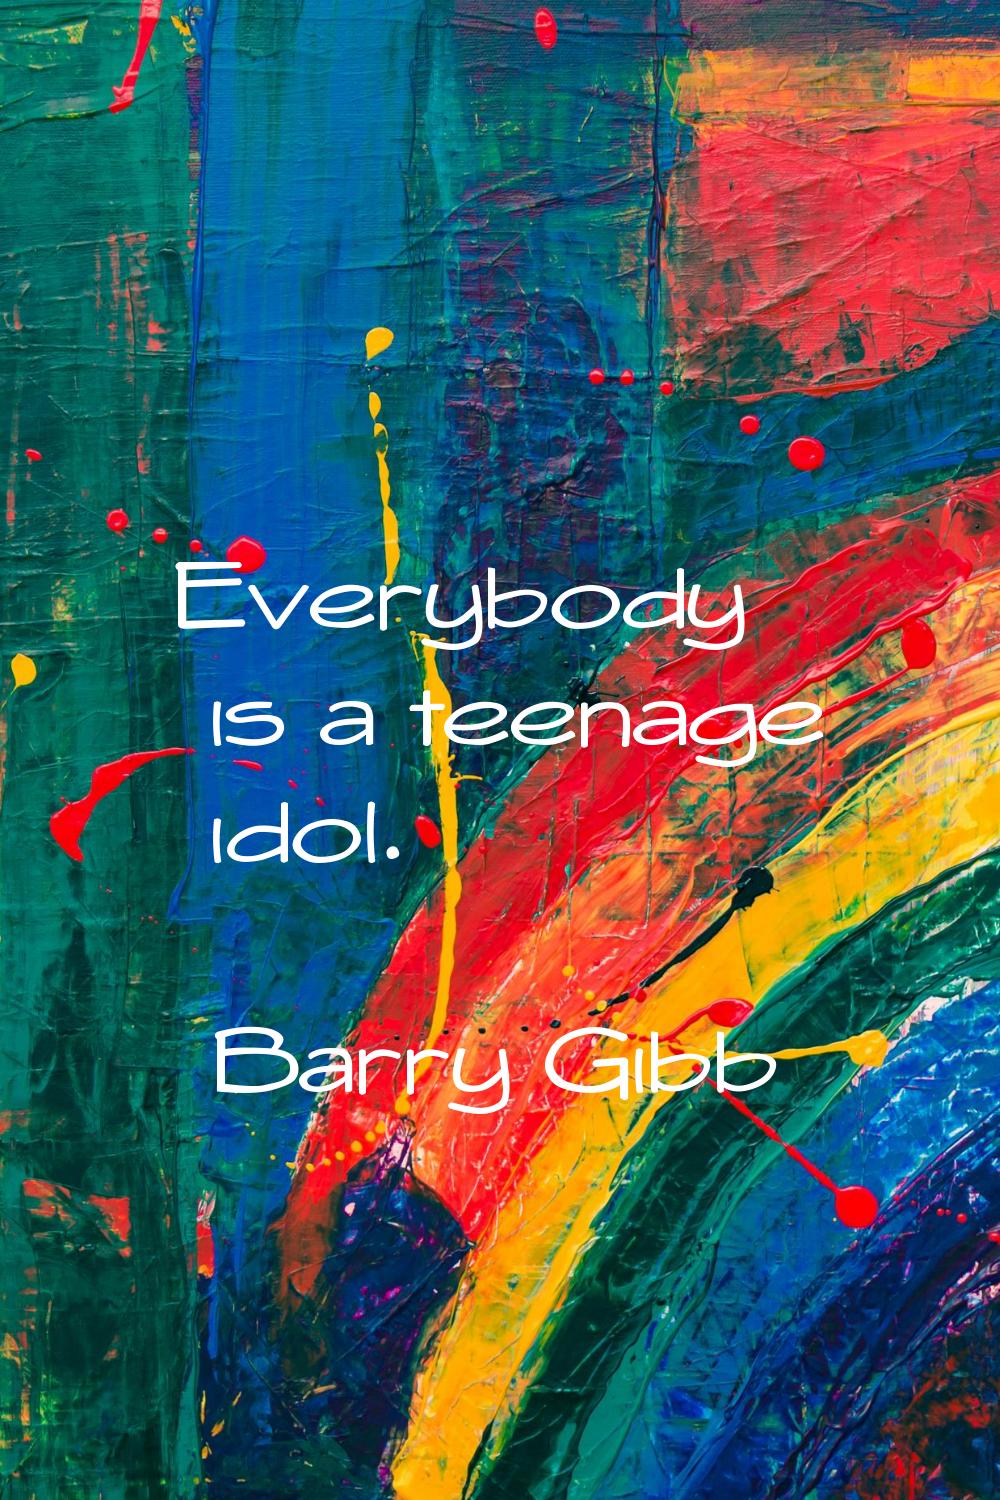 Everybody is a teenage idol.